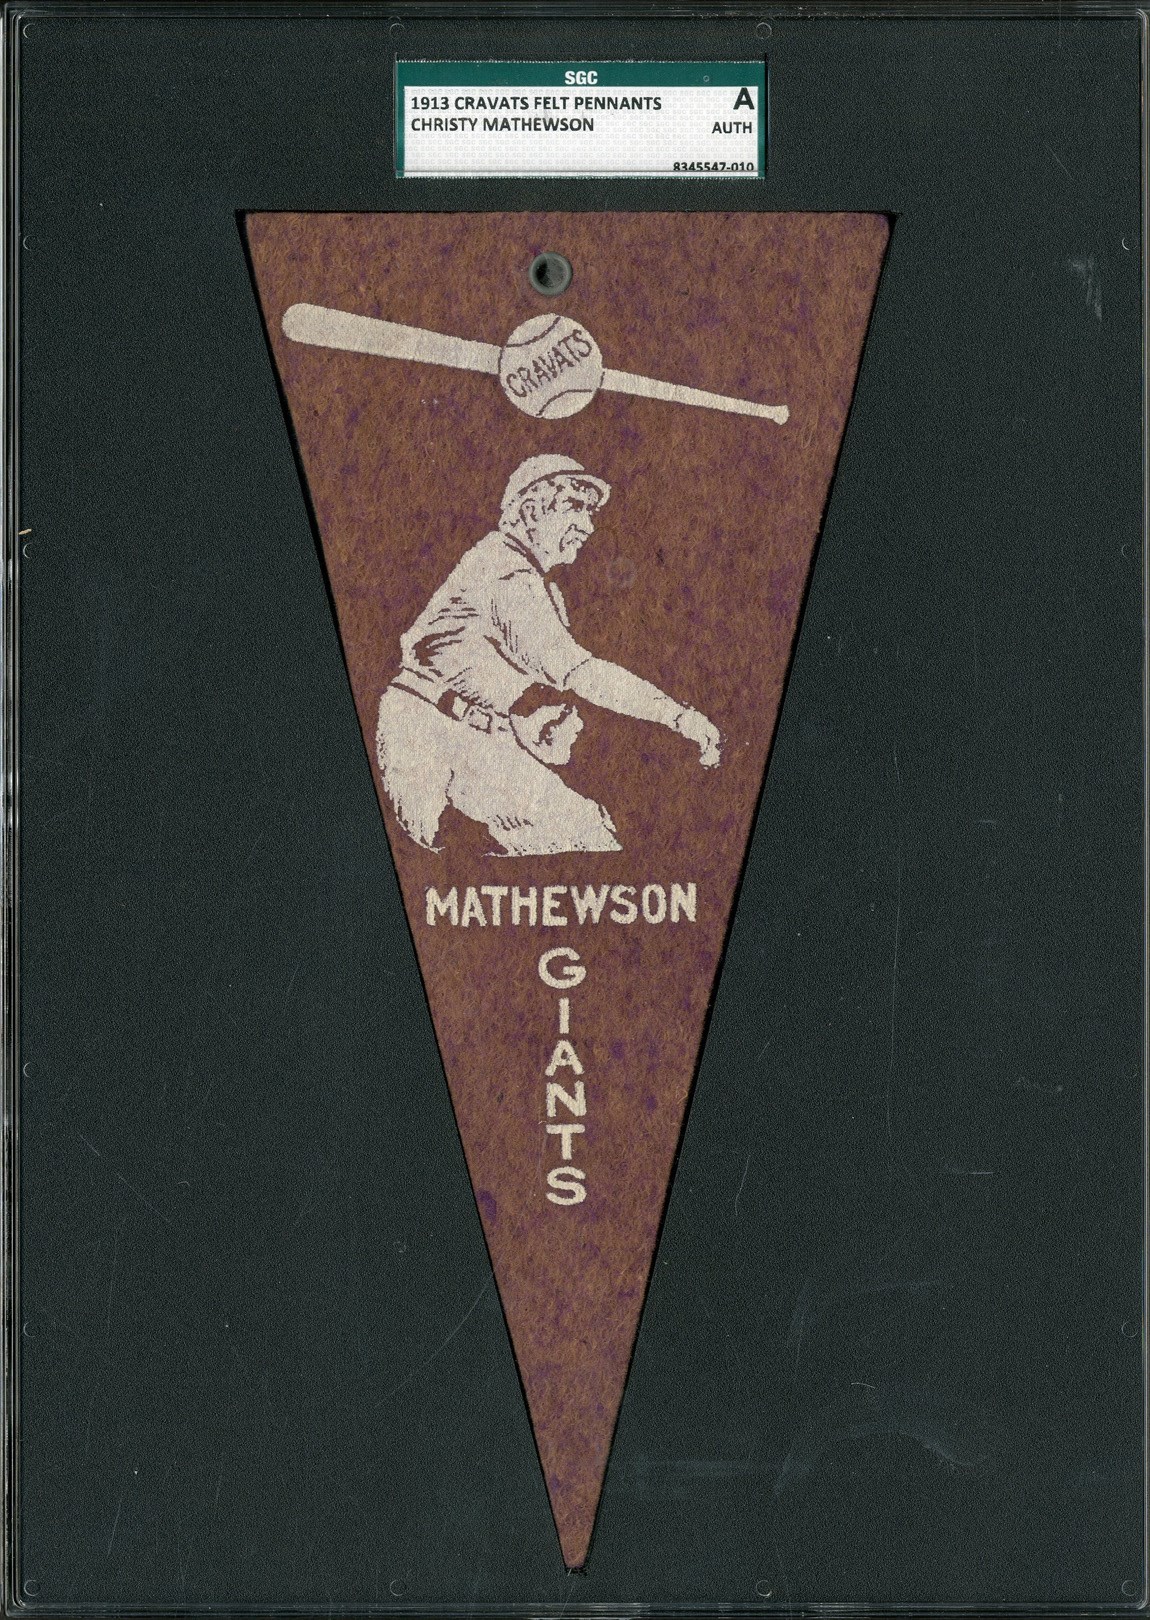 Baseball and Trading Cards - 1913 Christy Mathewson Cravats Felt Pennant (EX/MT) - SGC AUTHENTIC